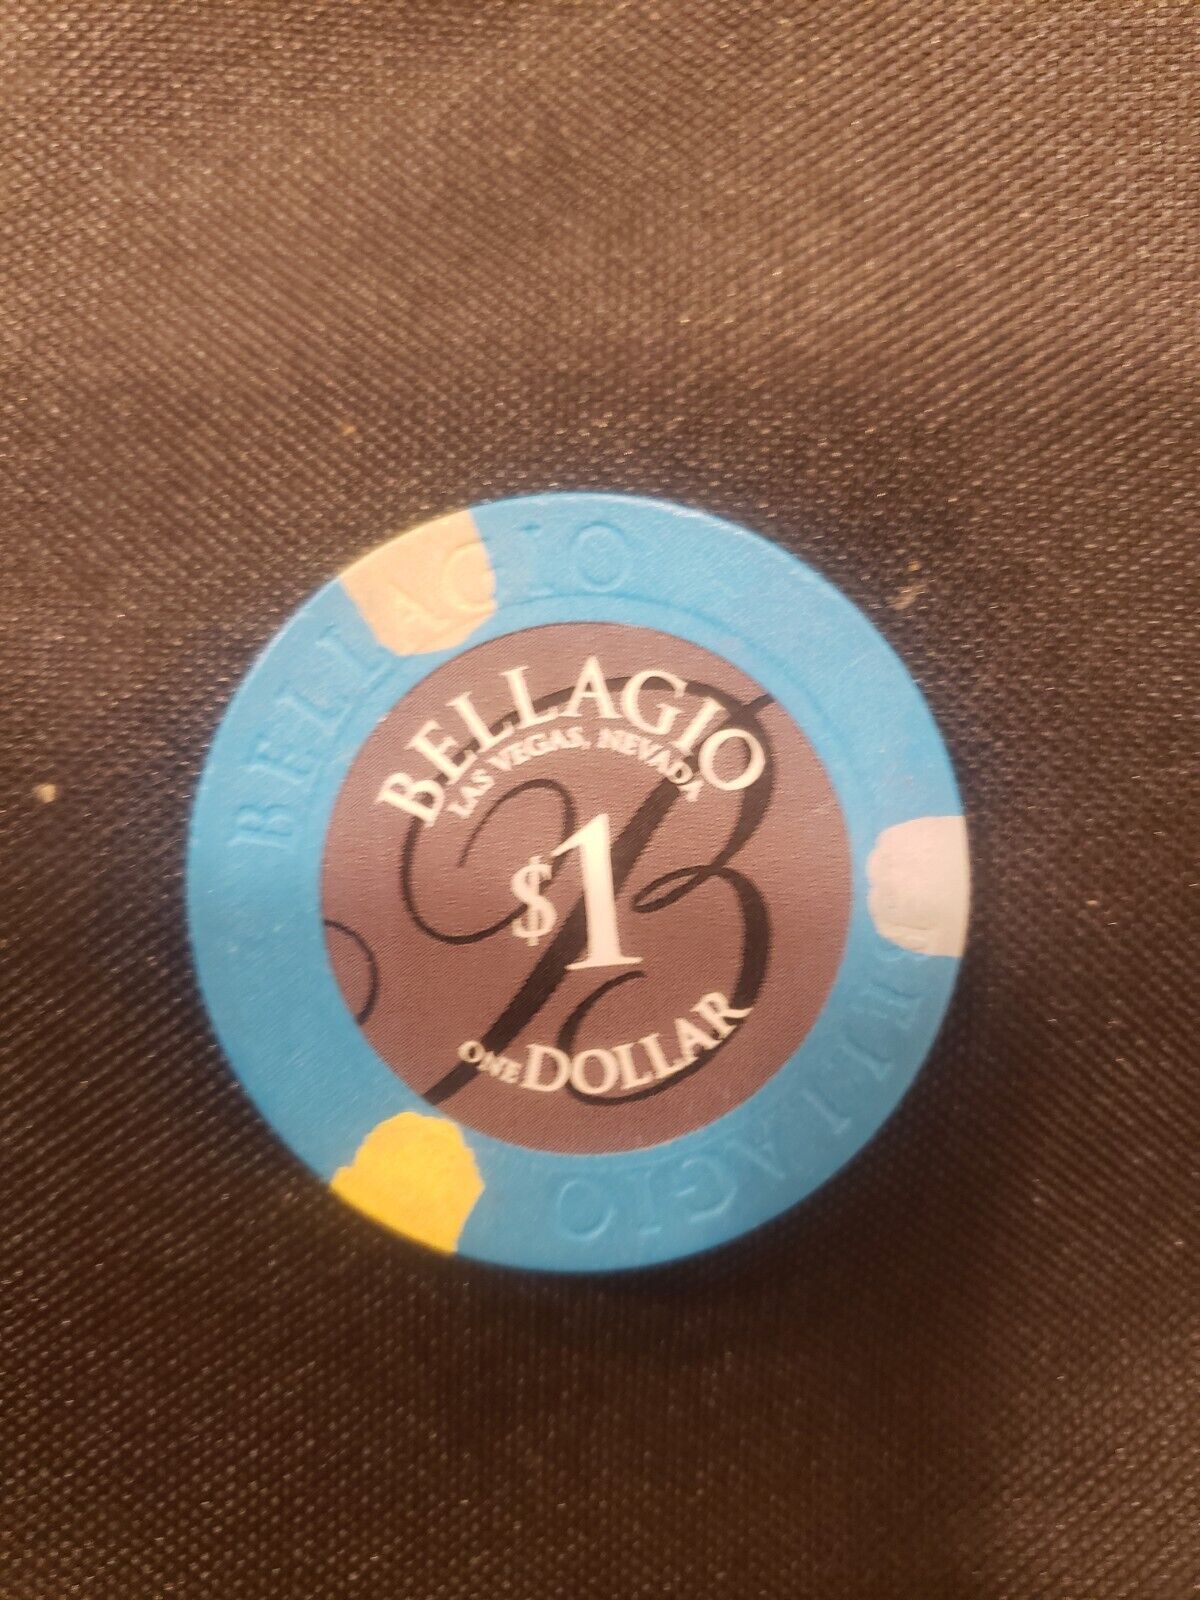 1.00 Chip from the Bellagio Casino Las Vegas Nevada 